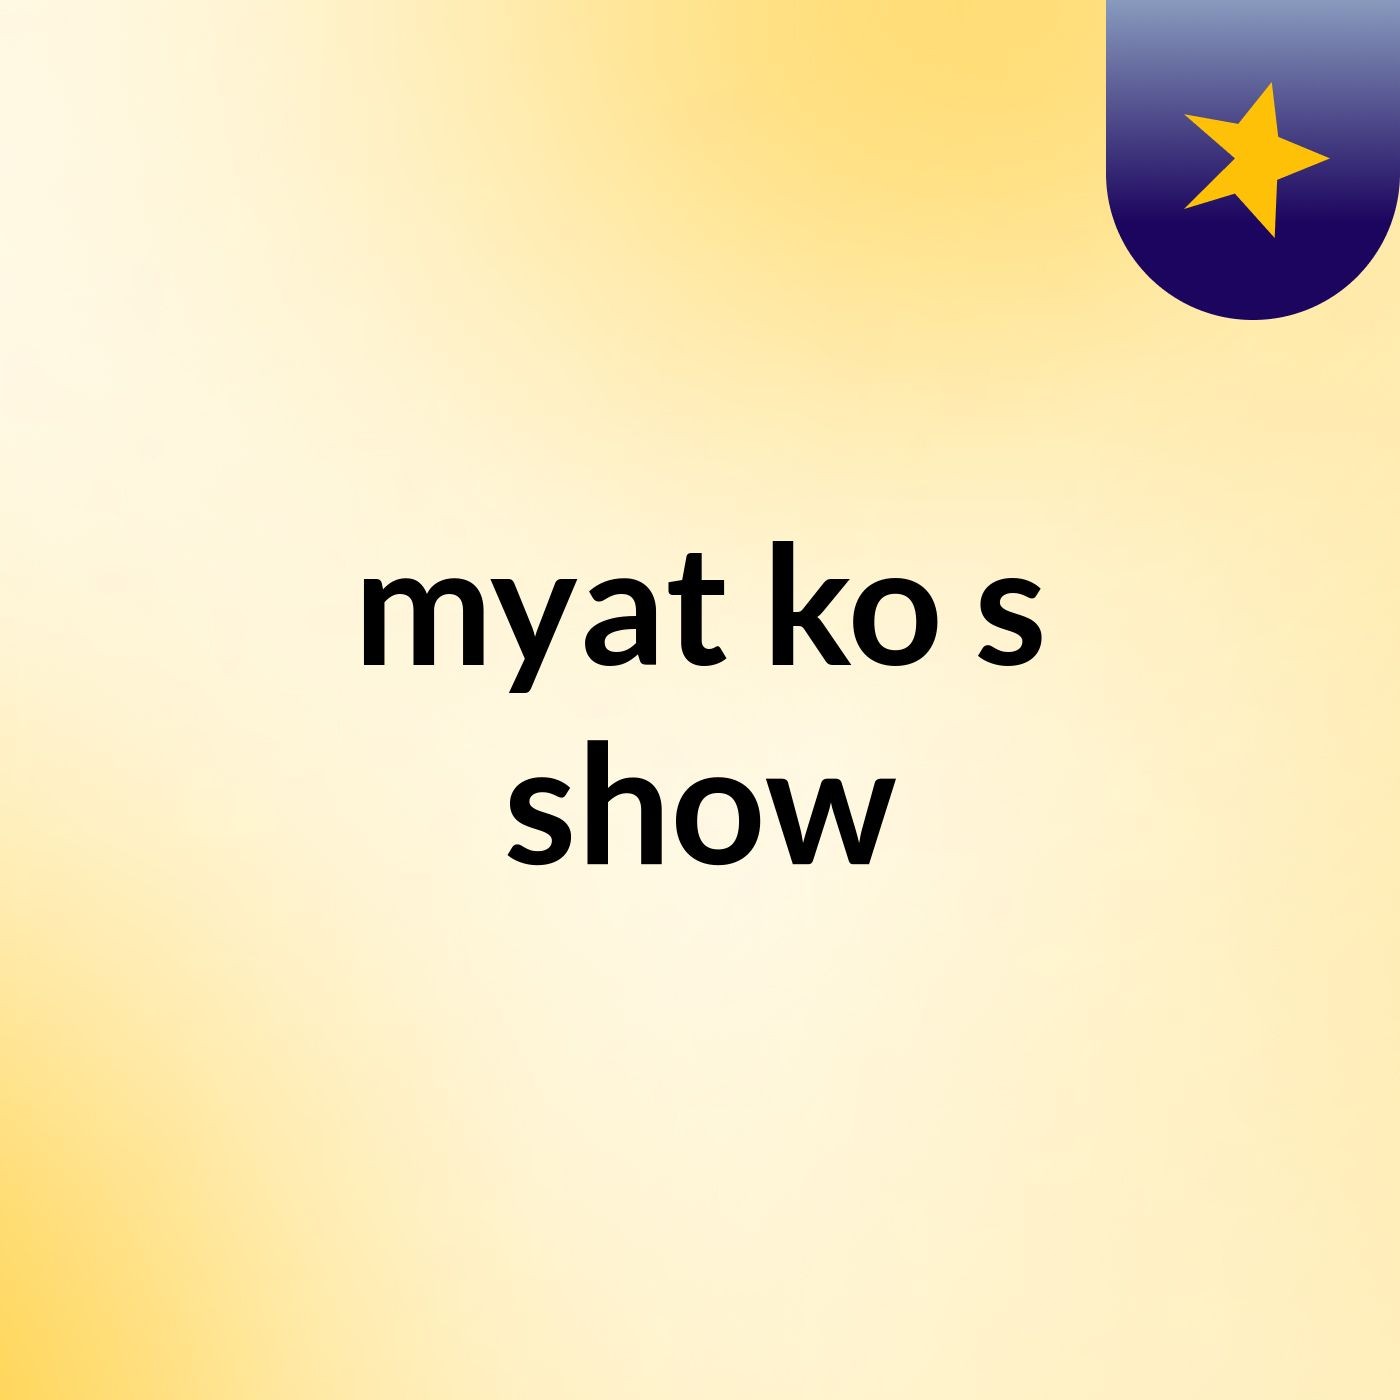 myat ko's show